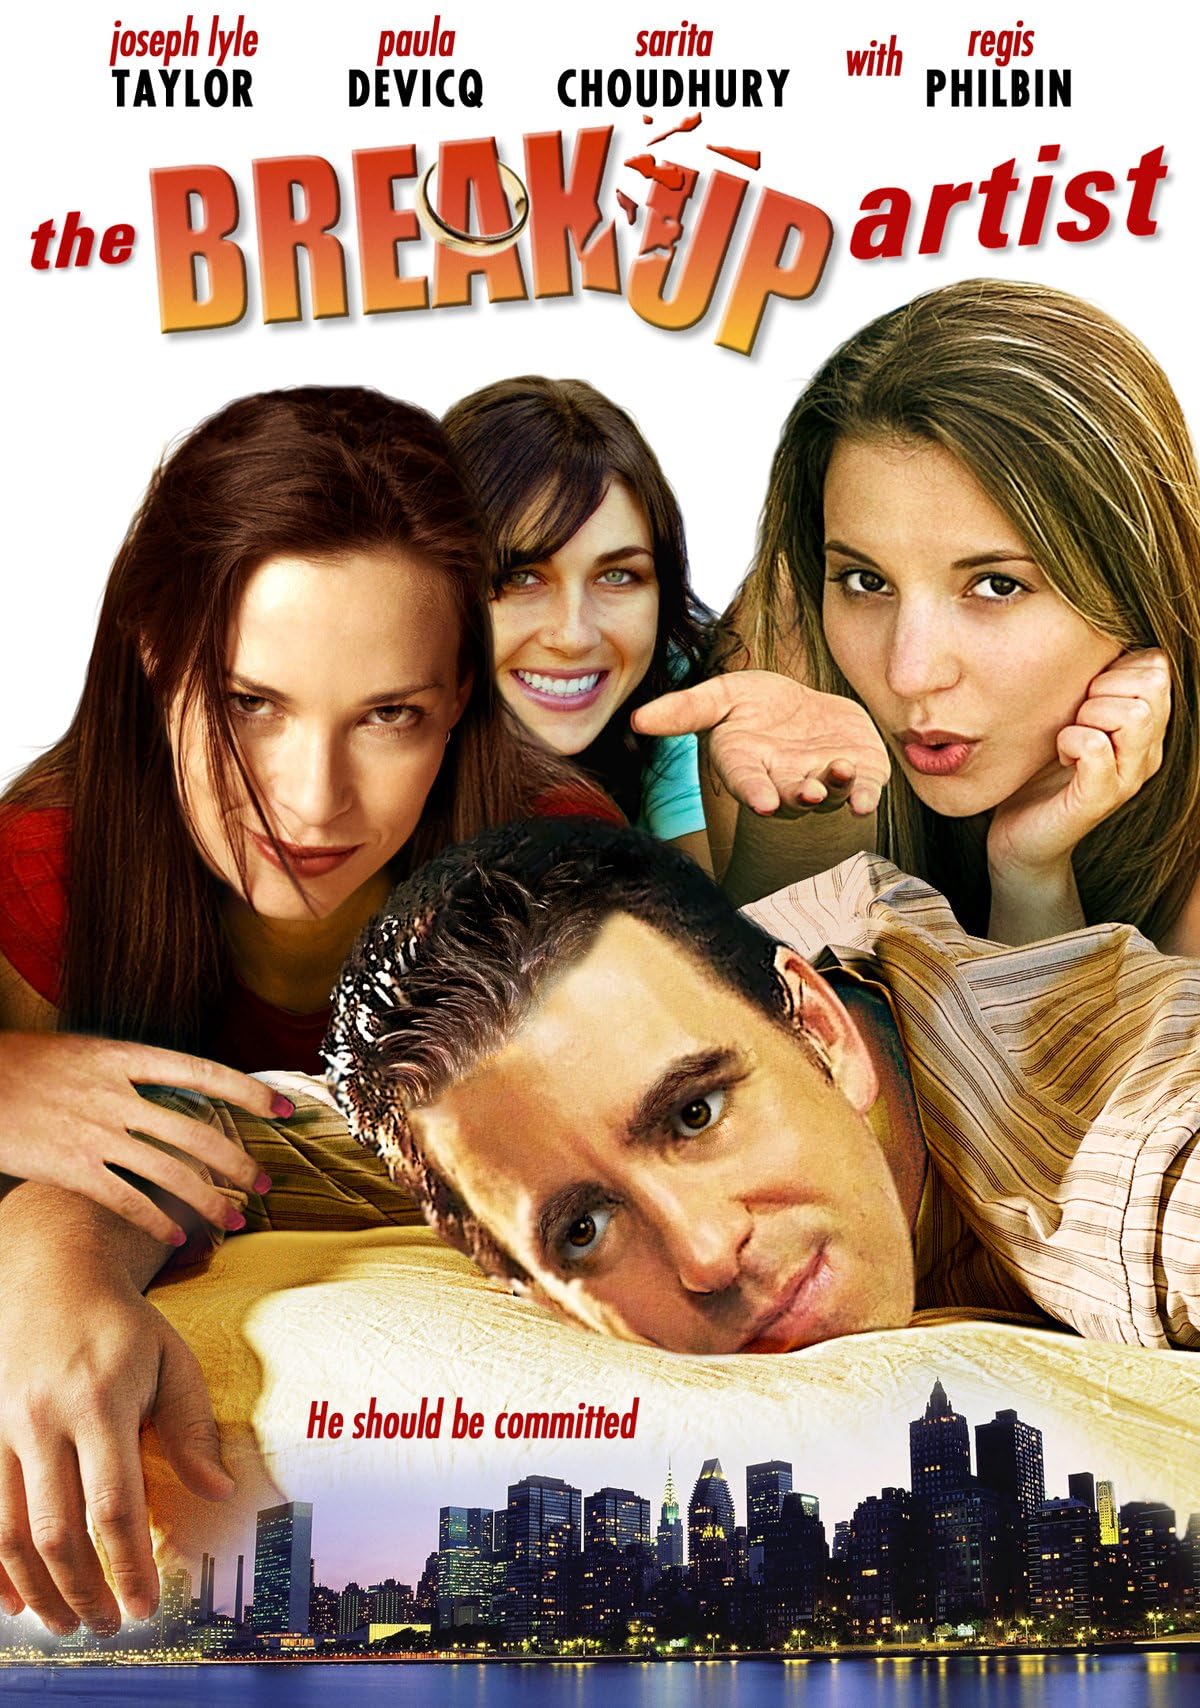 The Breakup Artist - (2004 movie) image